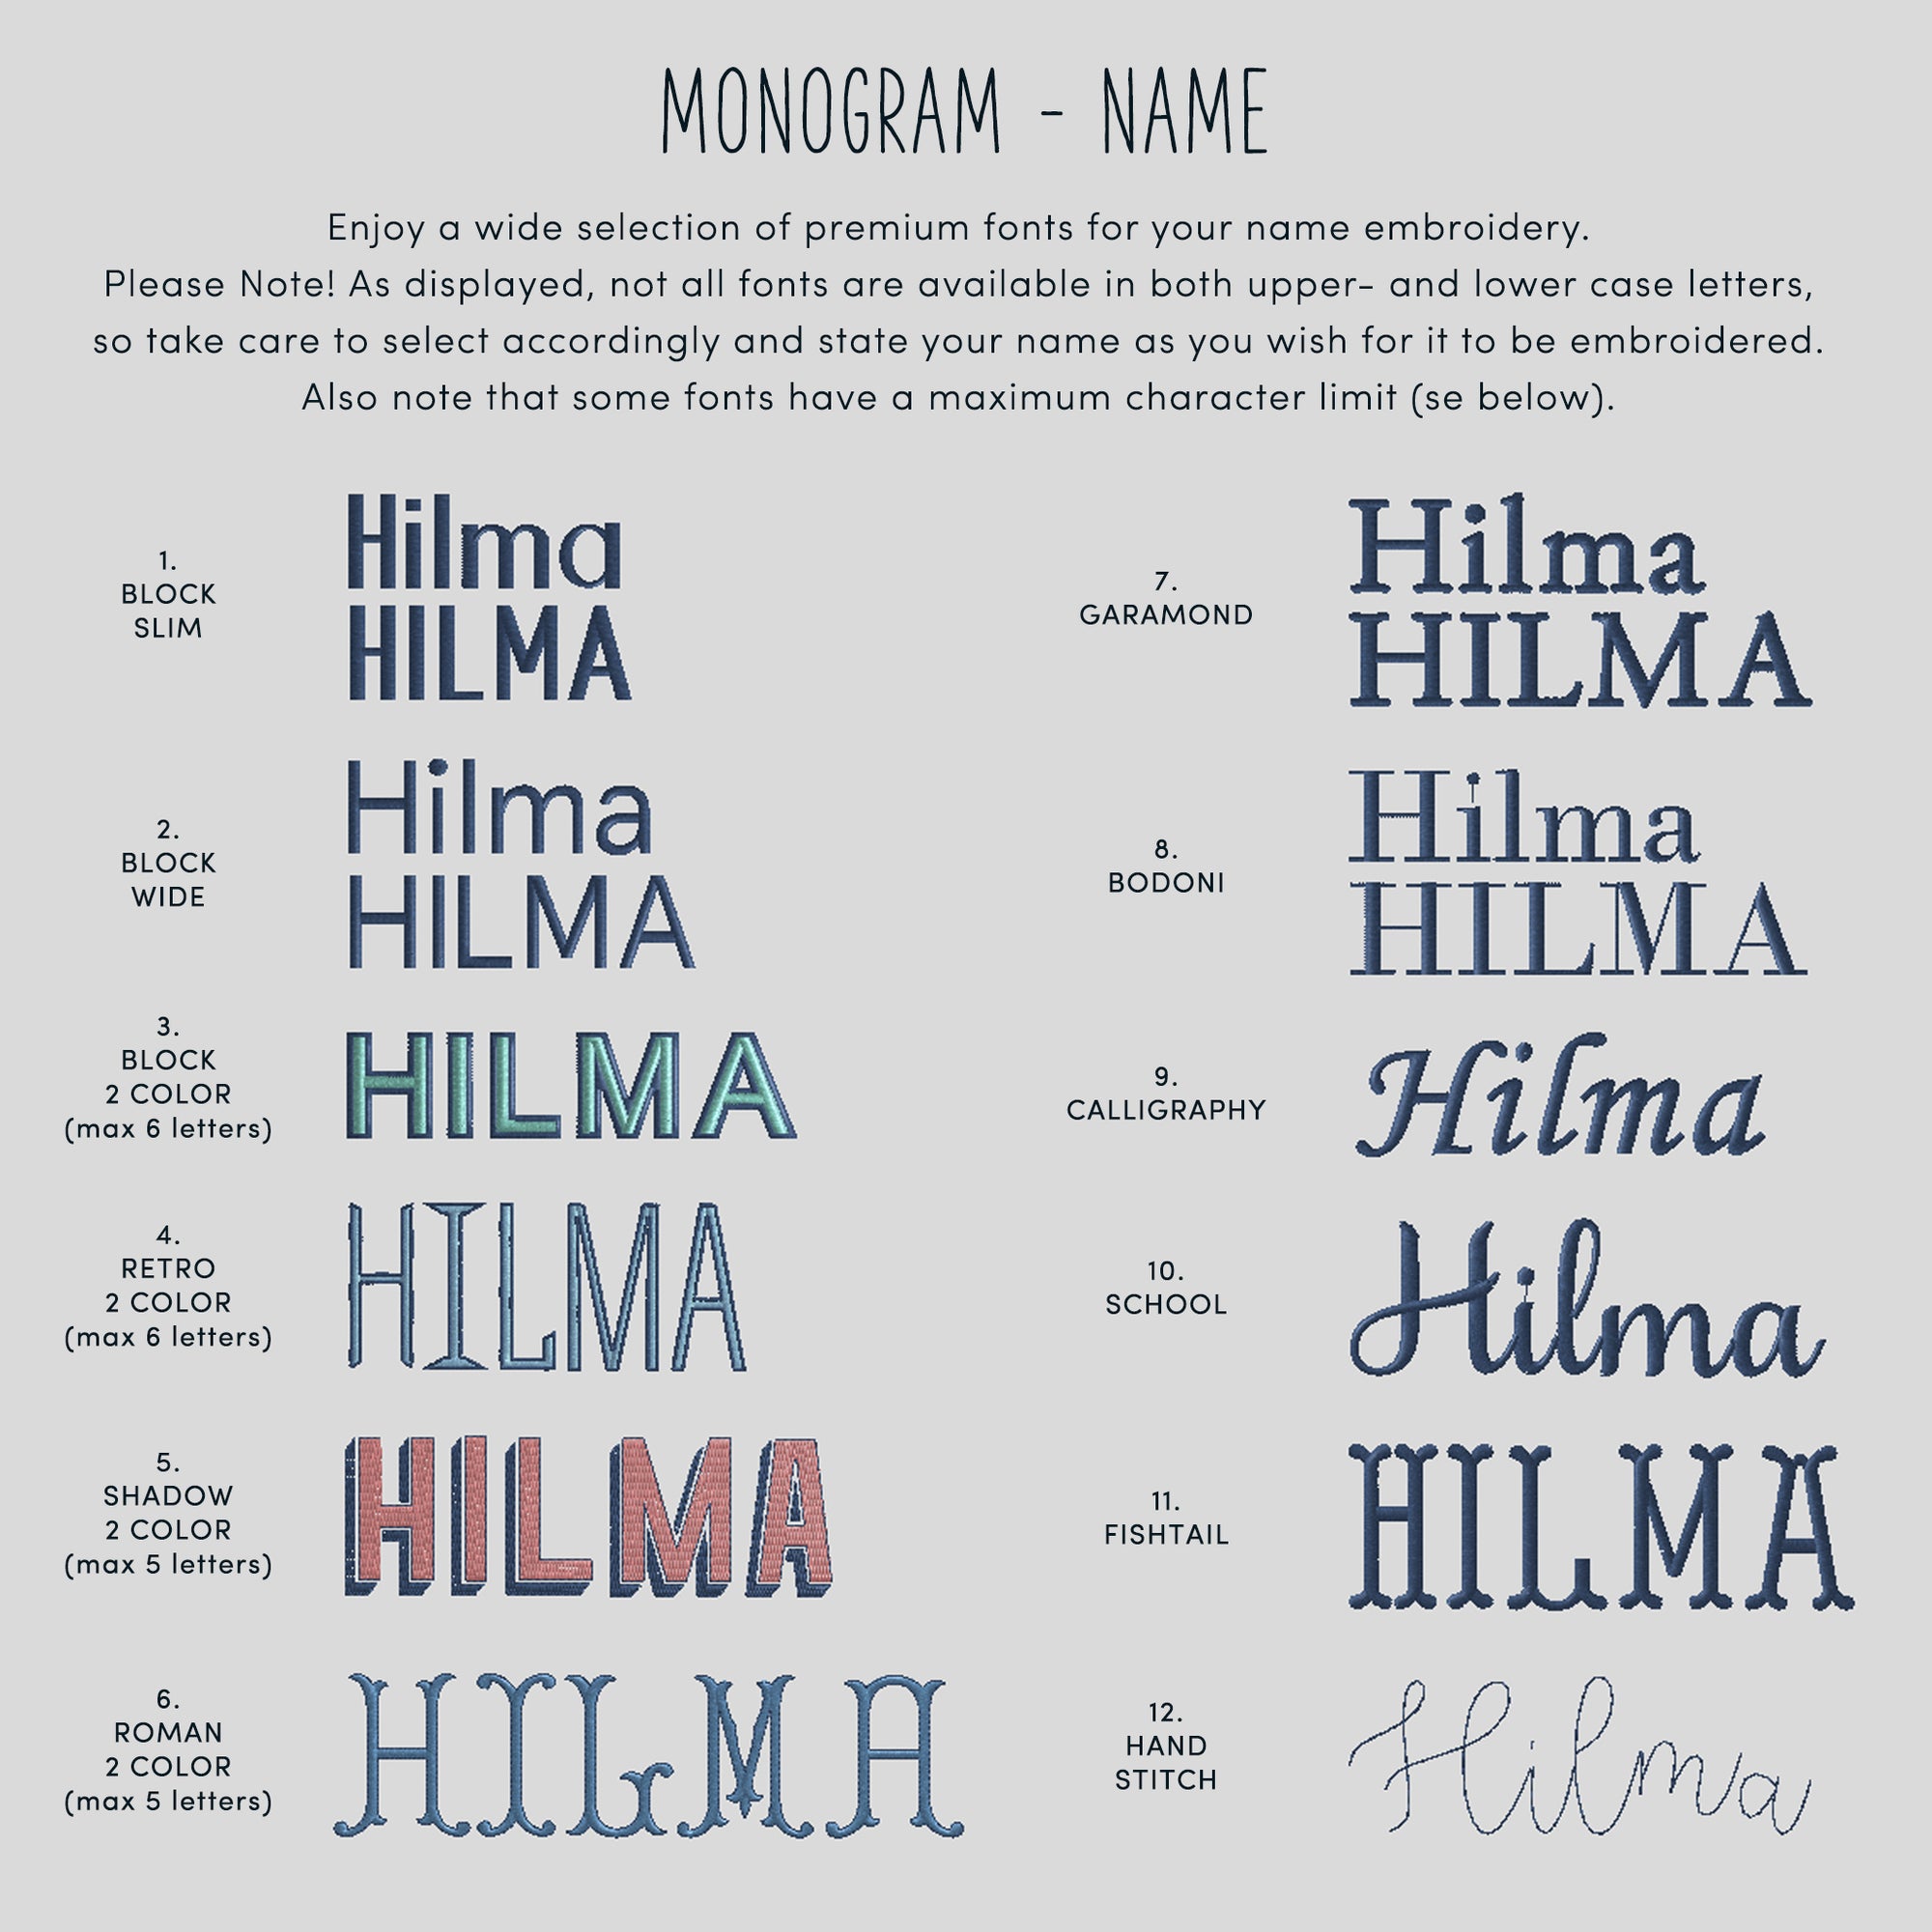 Monogram - Name